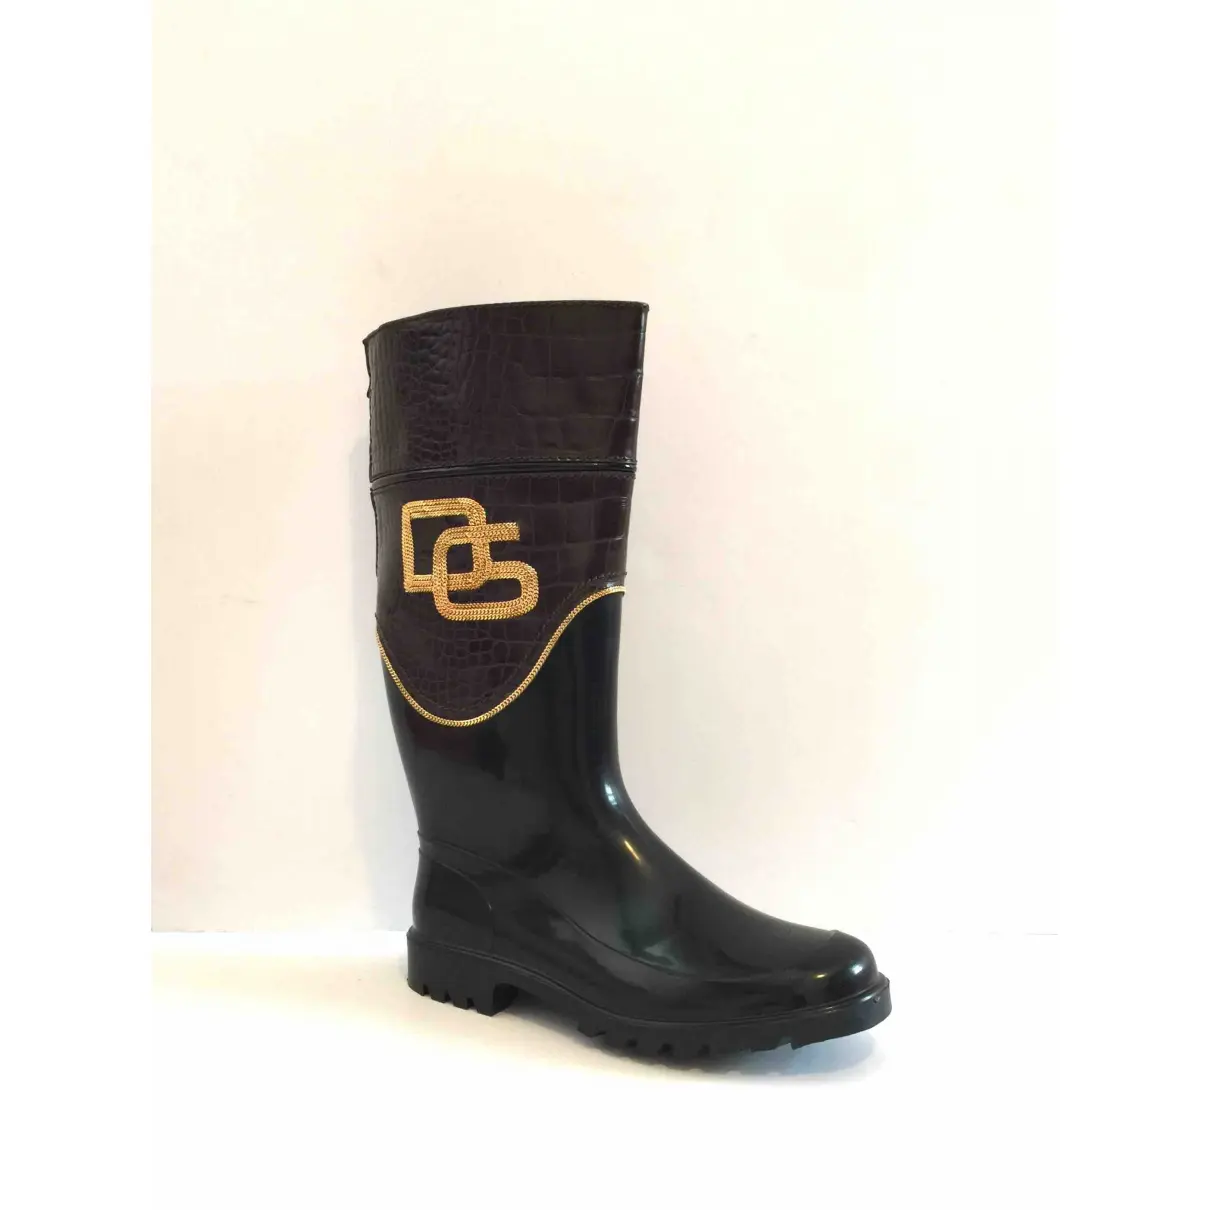 Dolce & Gabbana Wellington boots for sale